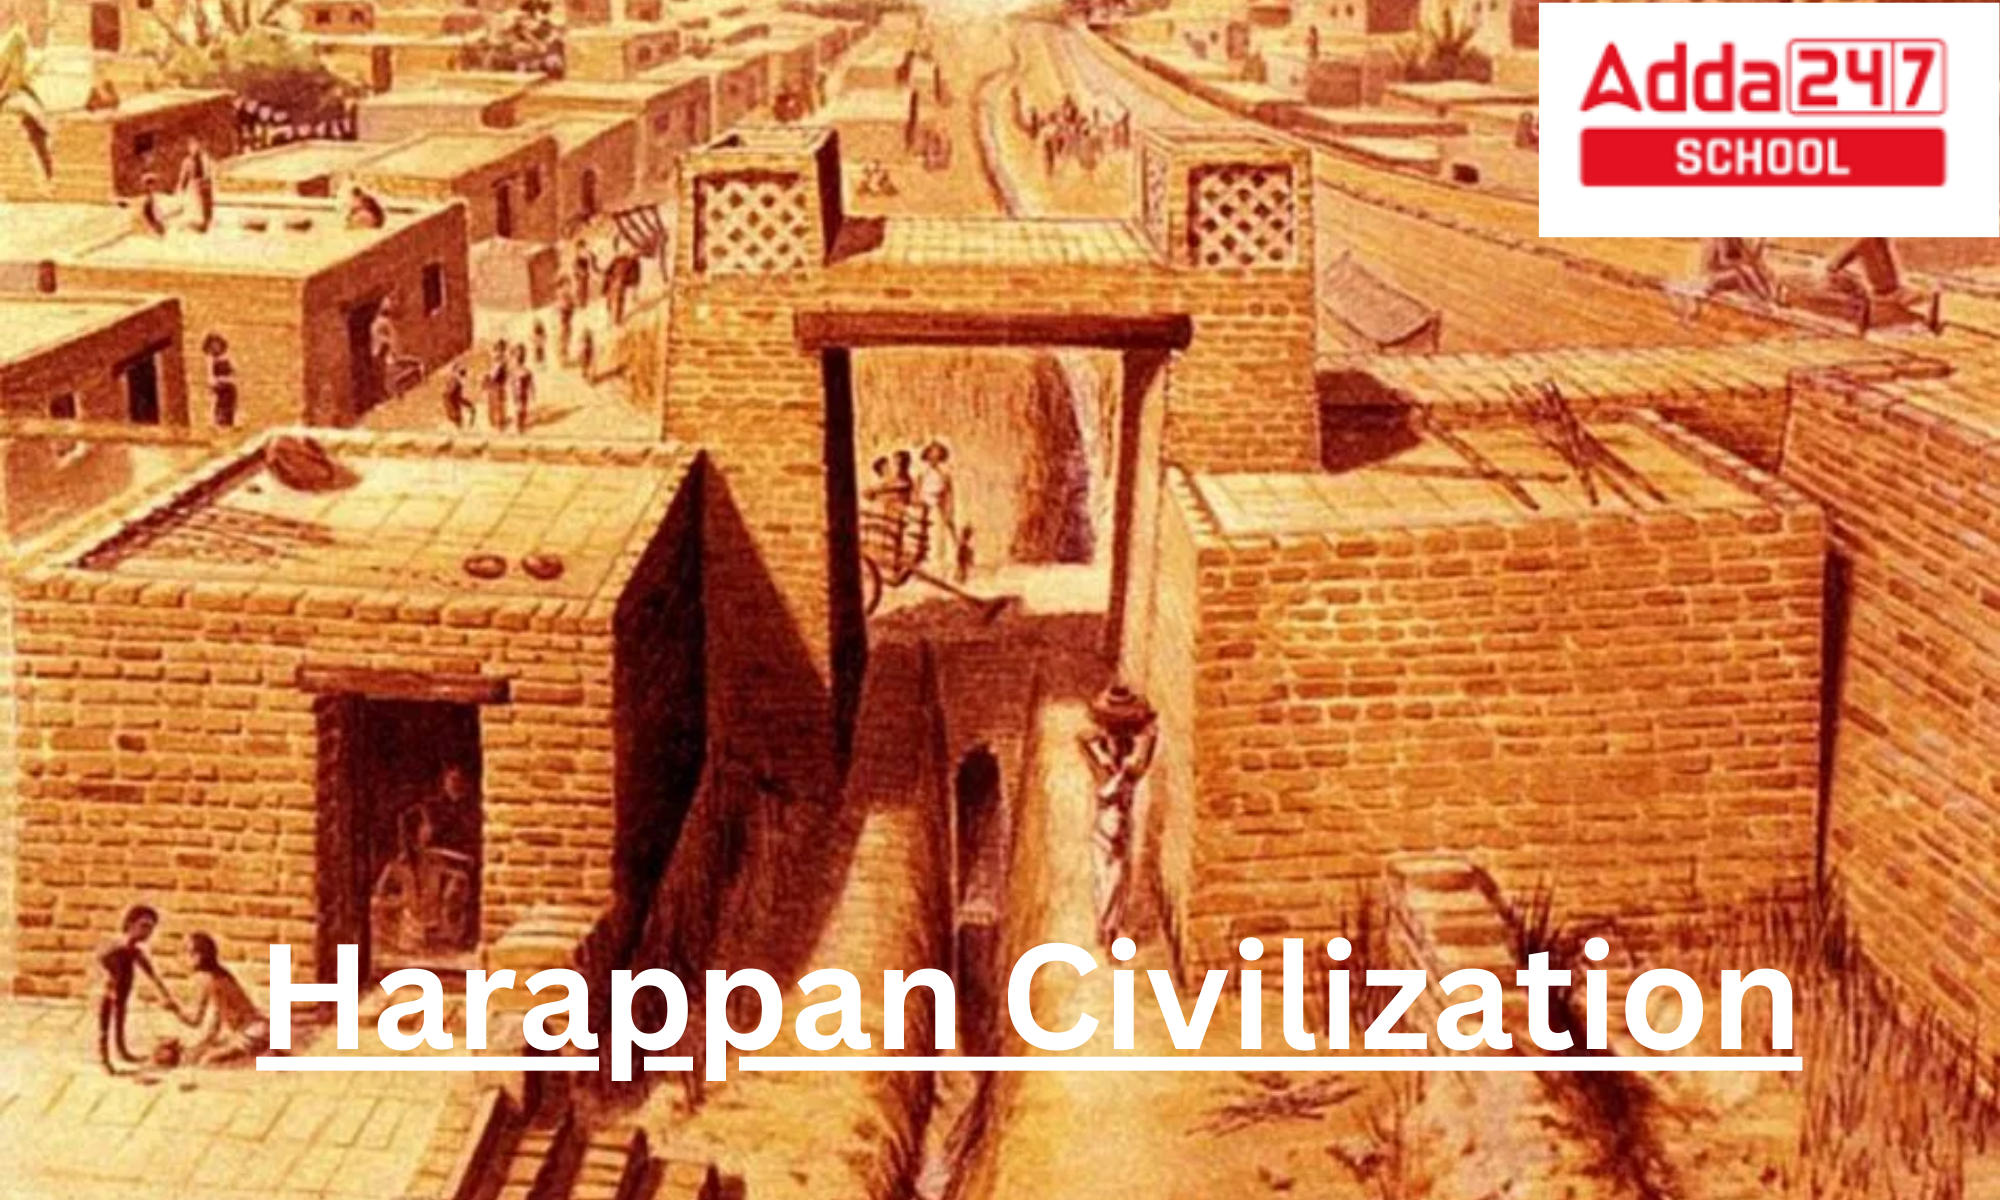 assignment on harappan civilization pdf